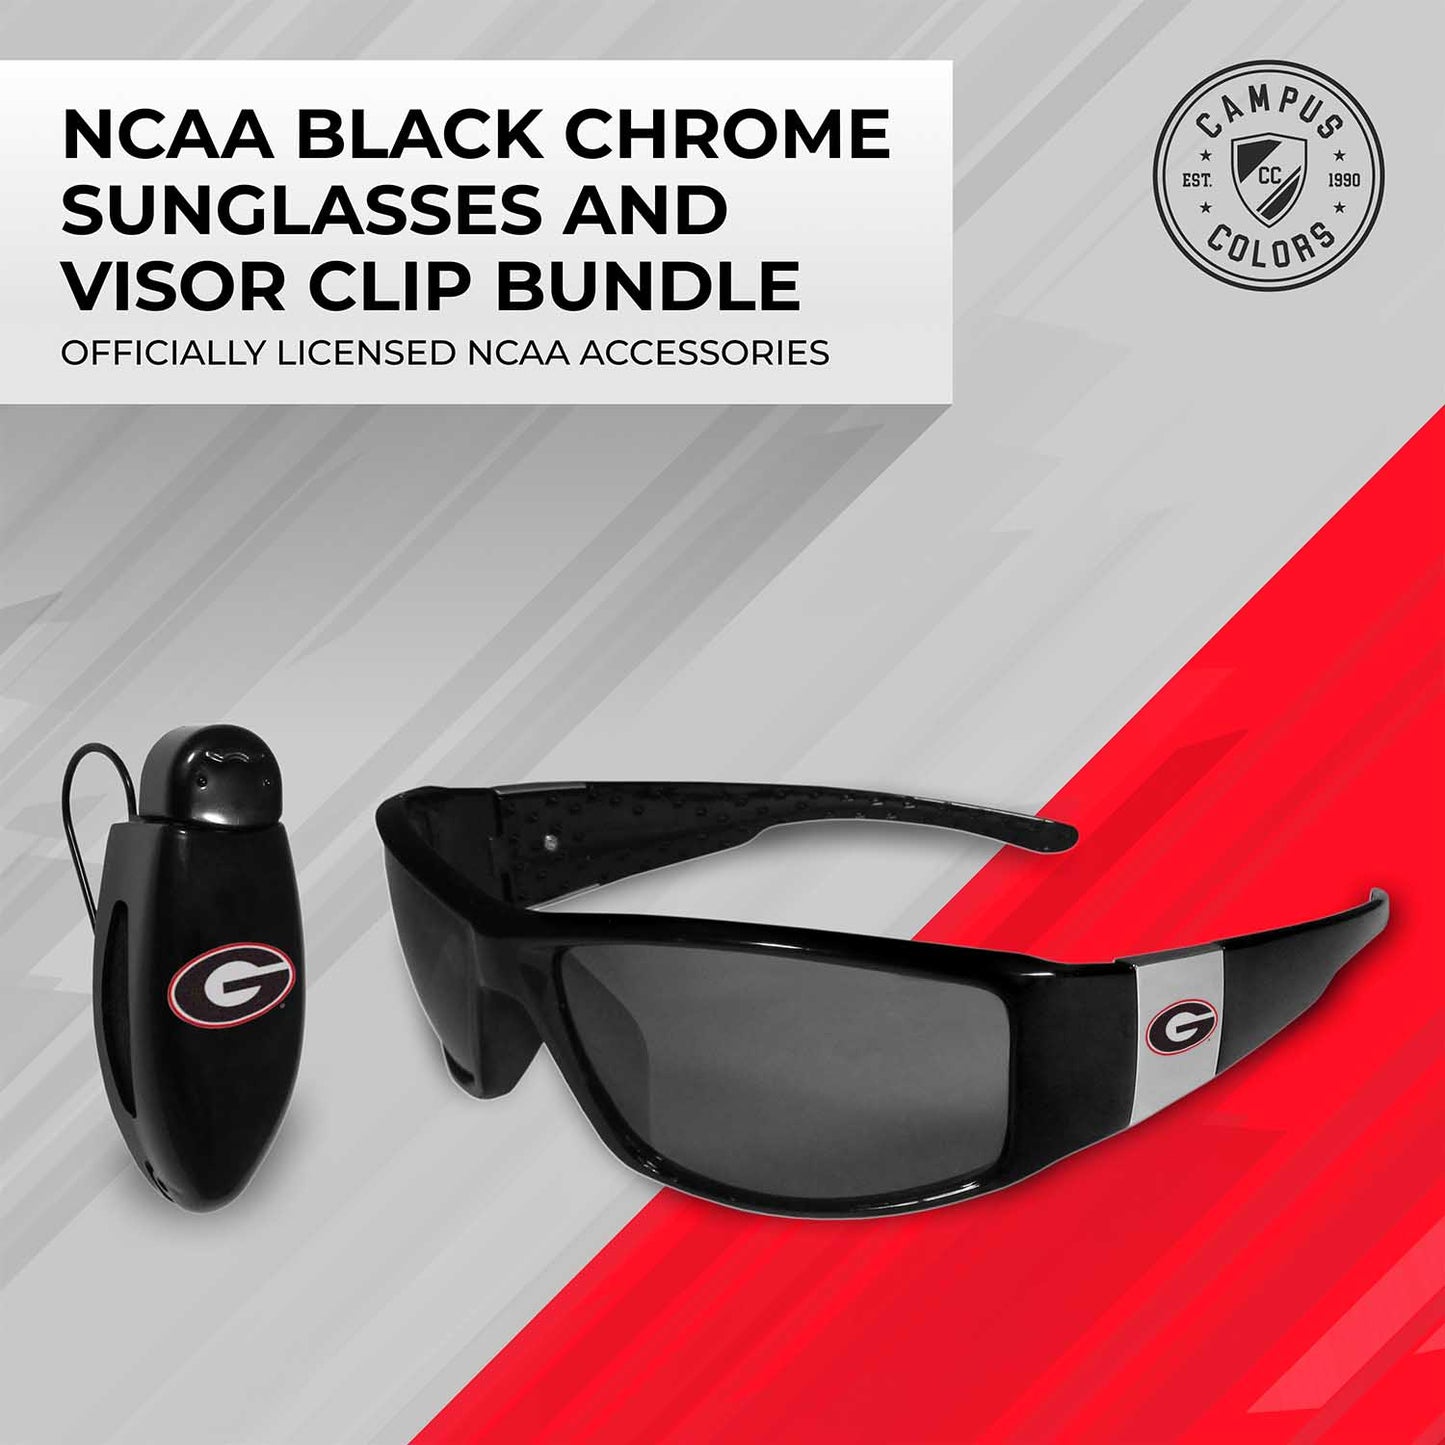 Georgia Bulldogs NCAA Black Chrome Sunglasses with Visor Clip Bundle - Black